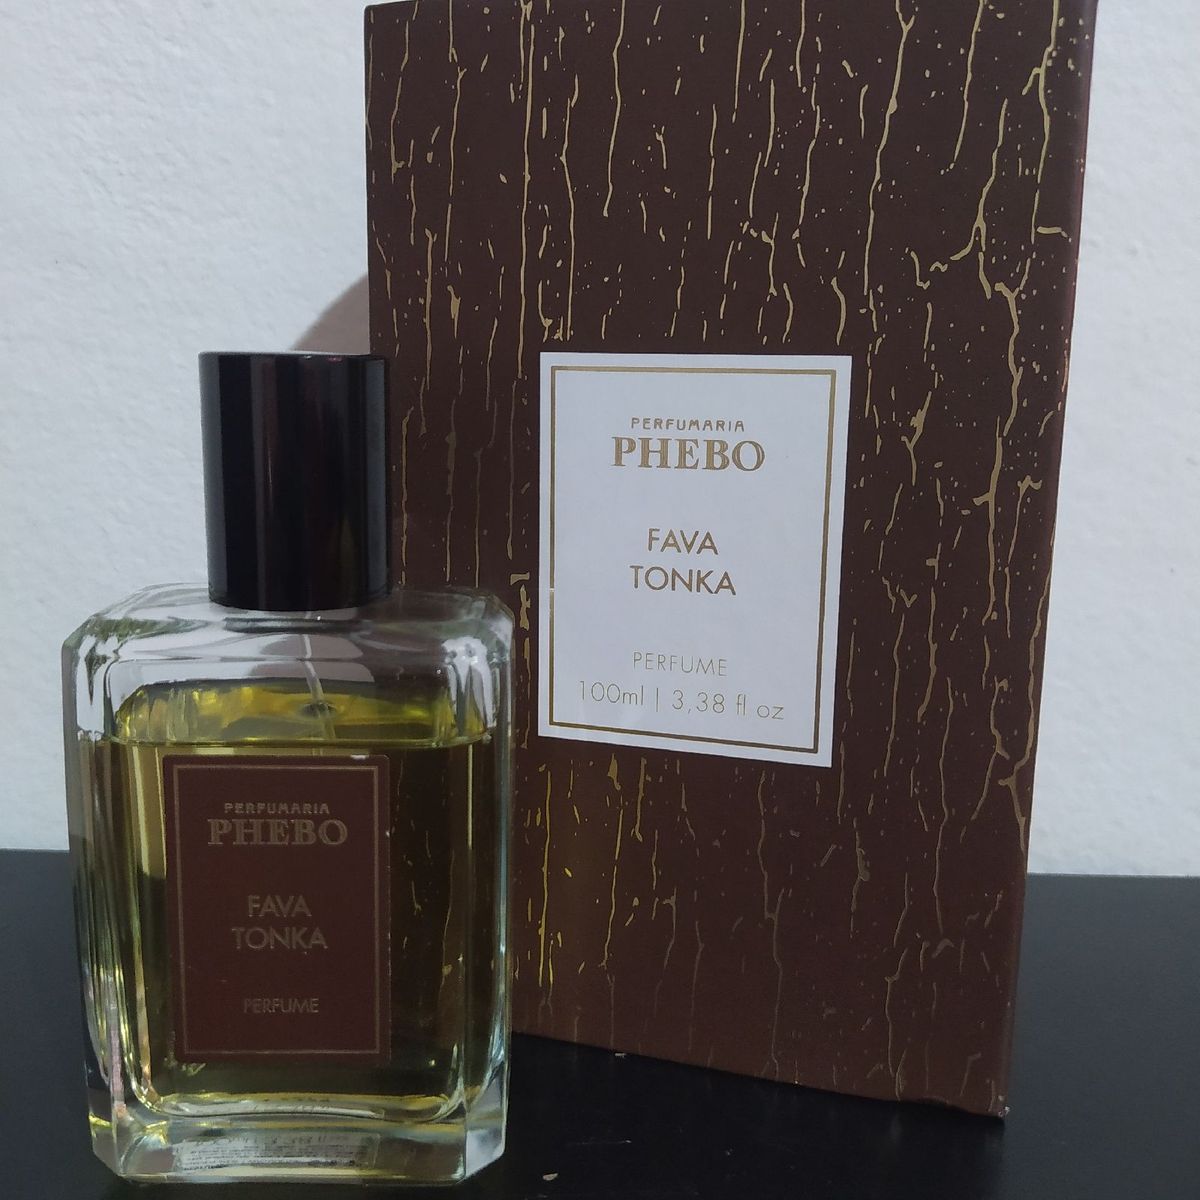 Perfume Phebo Fava Tonka 100ml